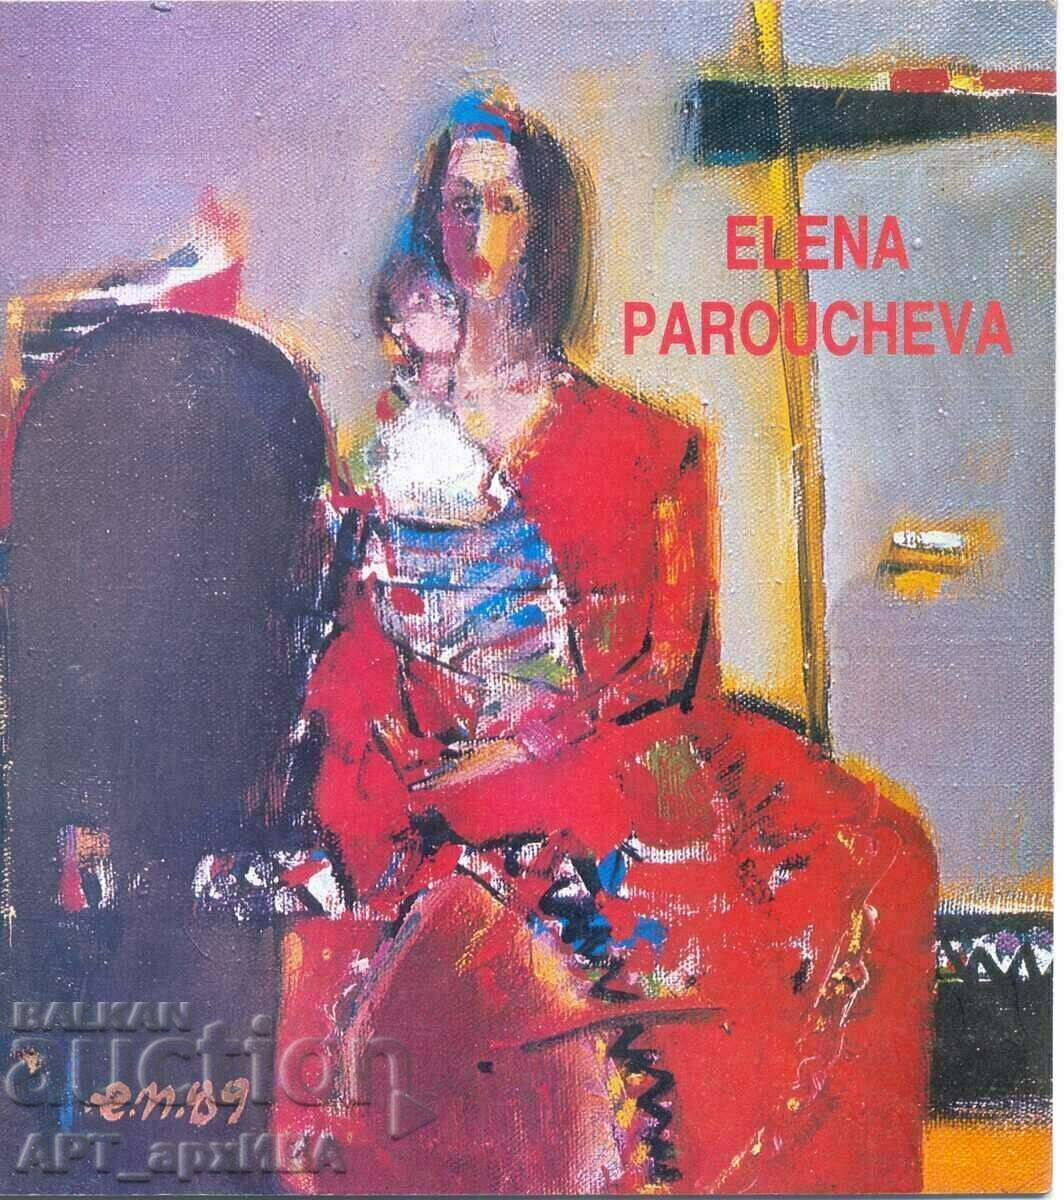 Catalog of an exhibition by Elena Parusheva, Sofia 1990